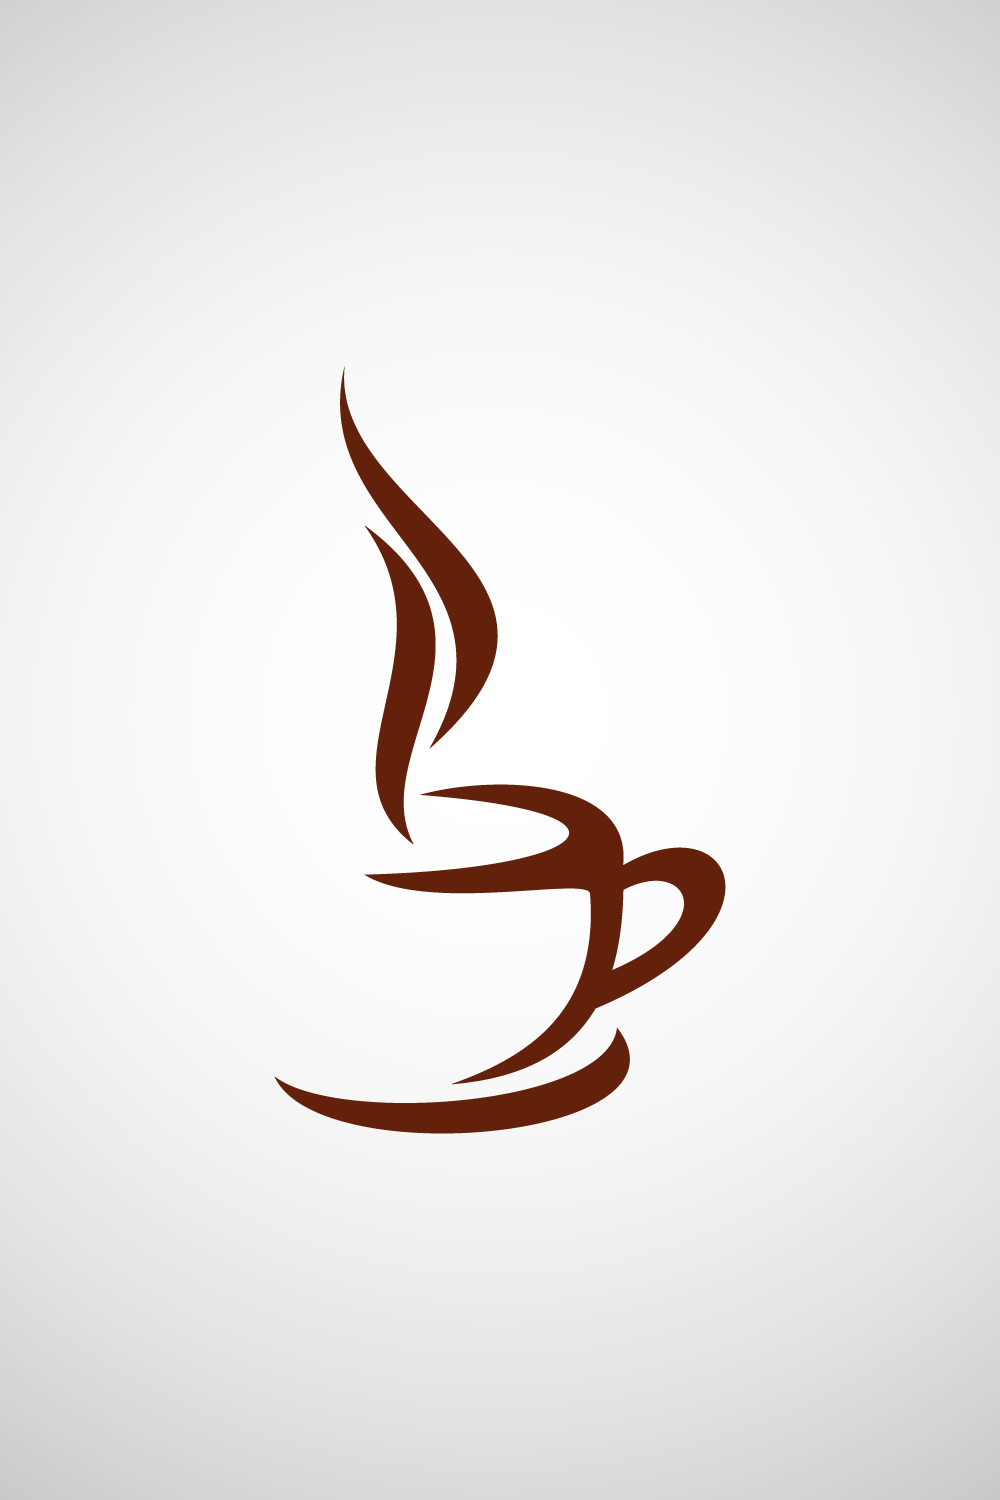 Coffee shop and restaurant logo design, Vector illustration pinterest preview image.